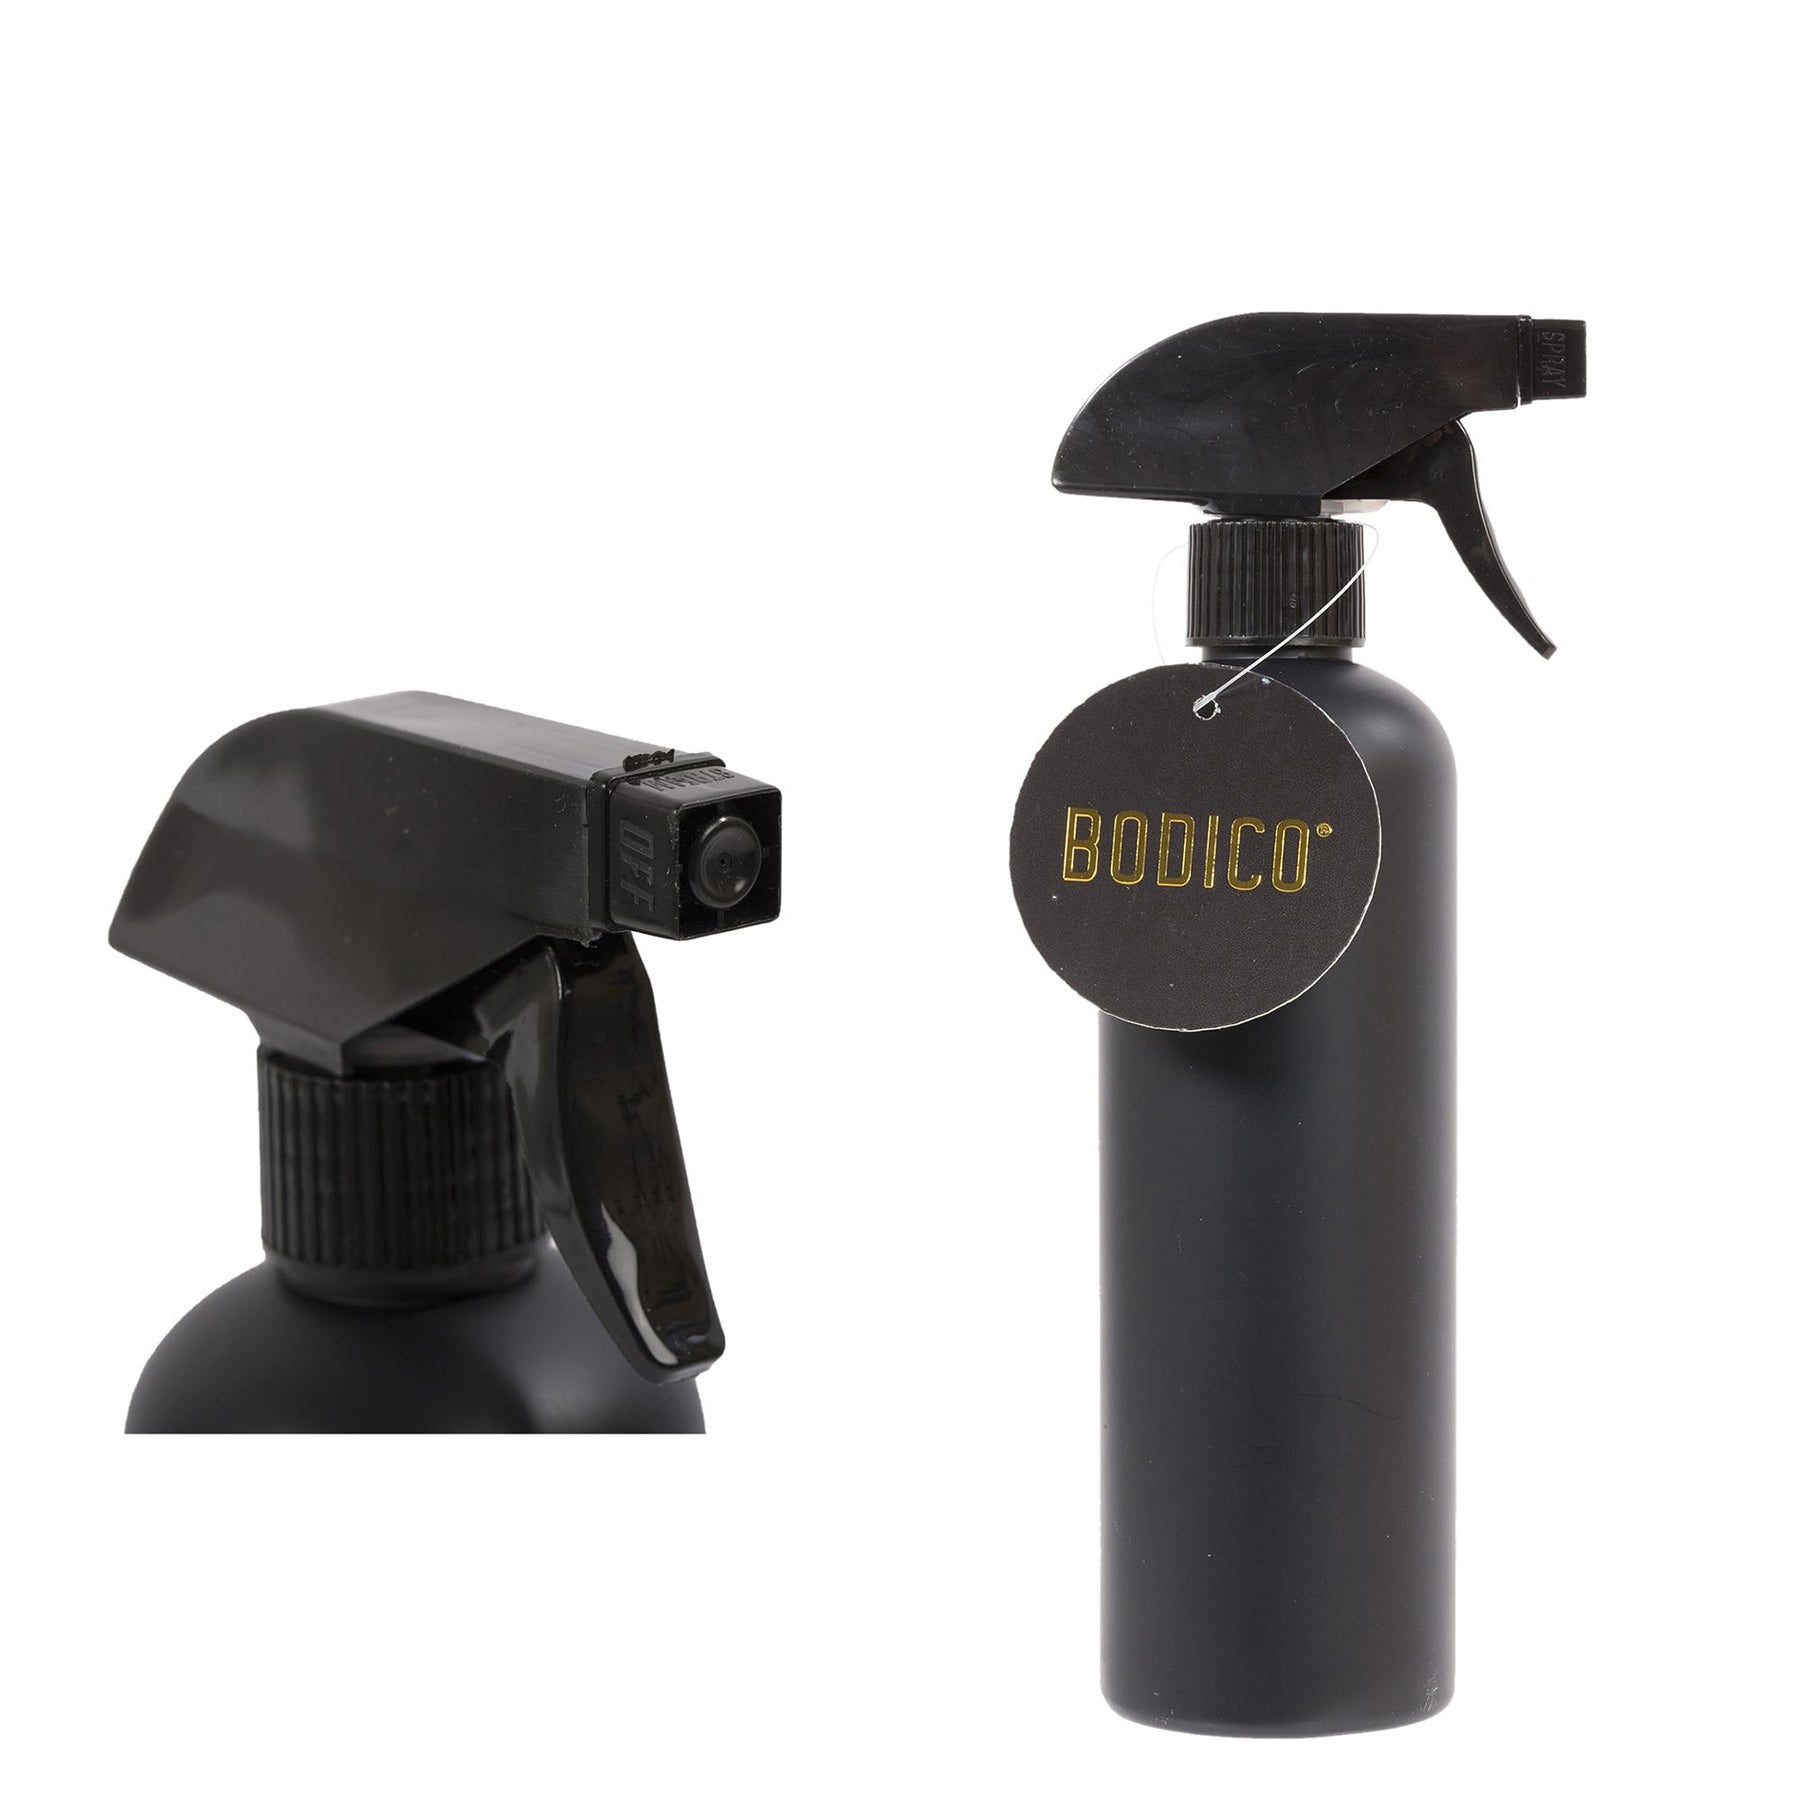 Bodico Spray Bottle Matte Black 16.9oz